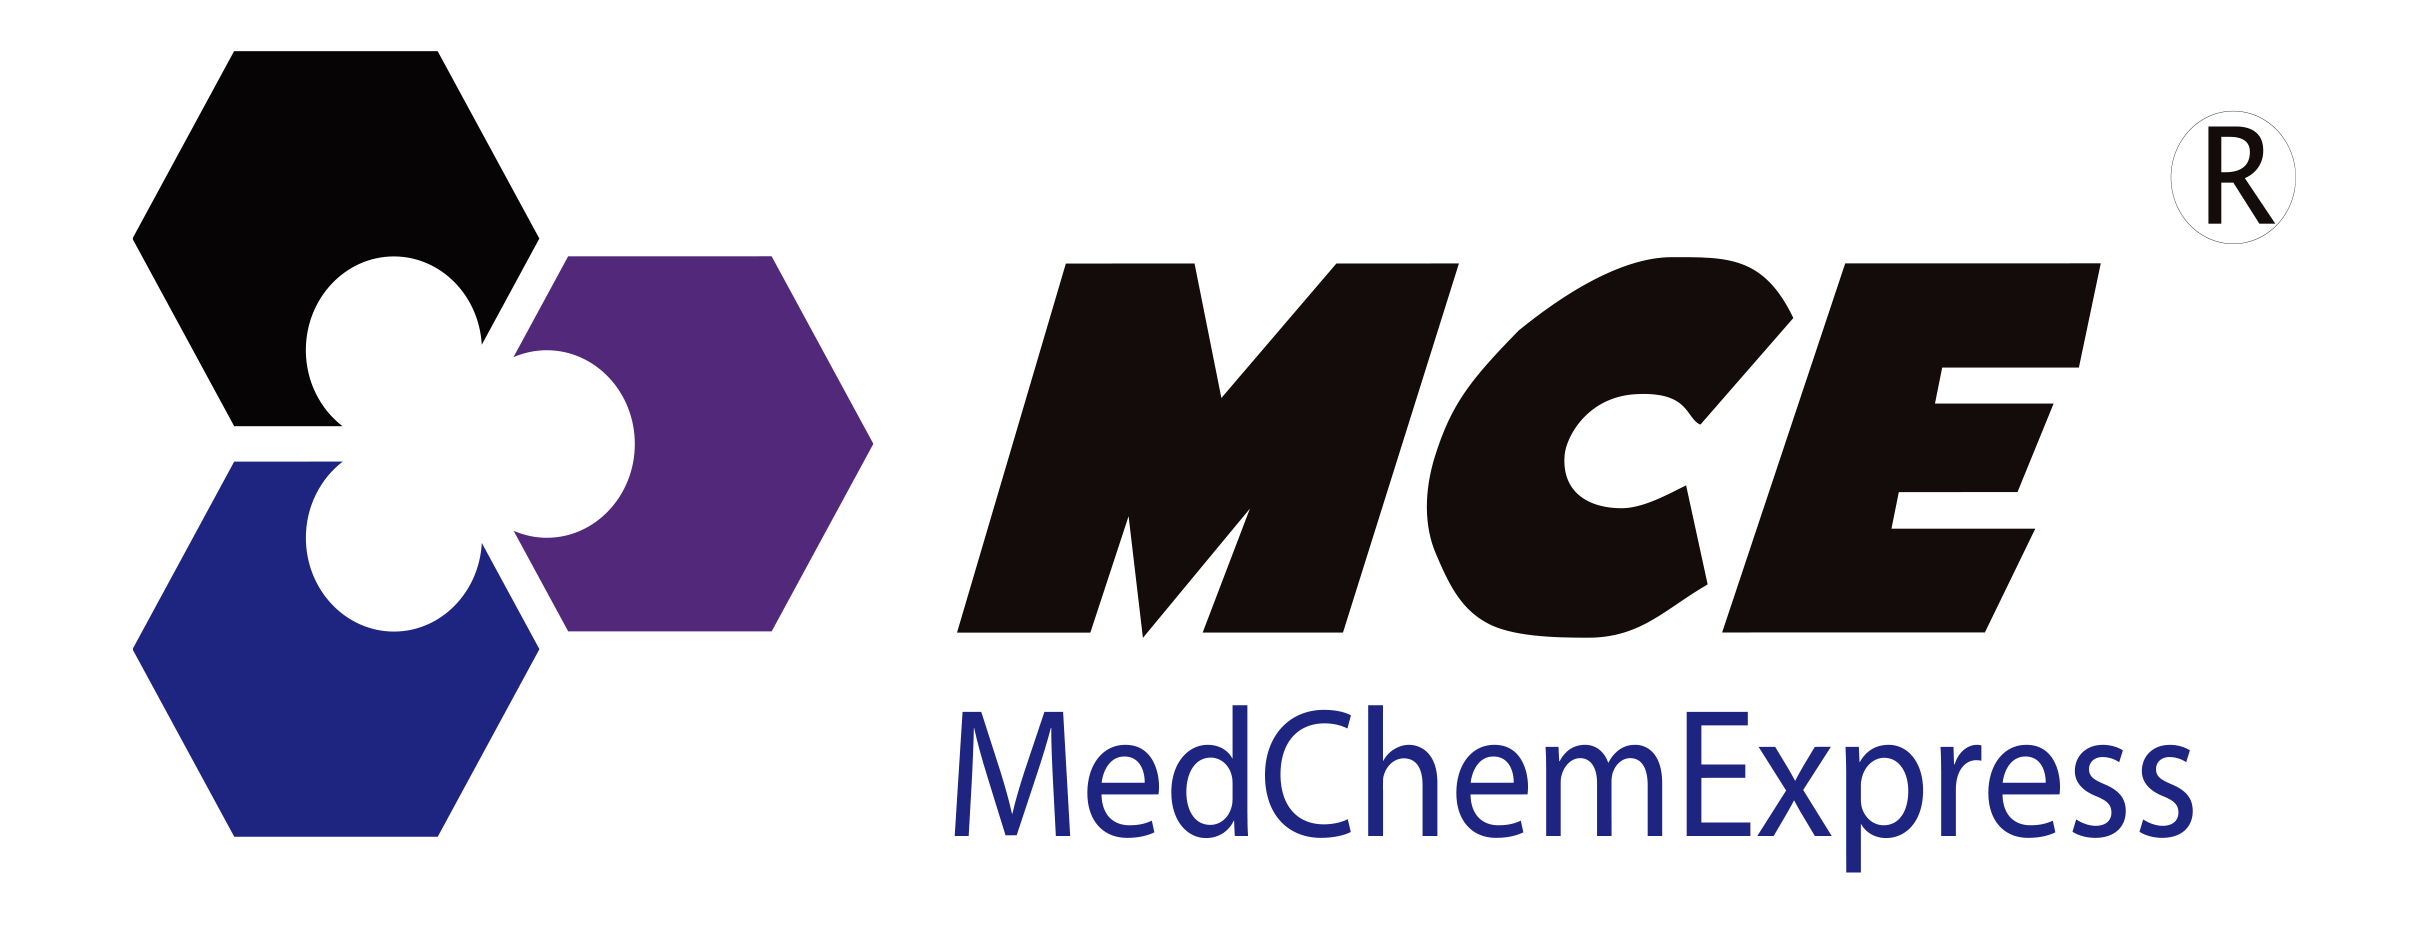 Medchemexpress Logo